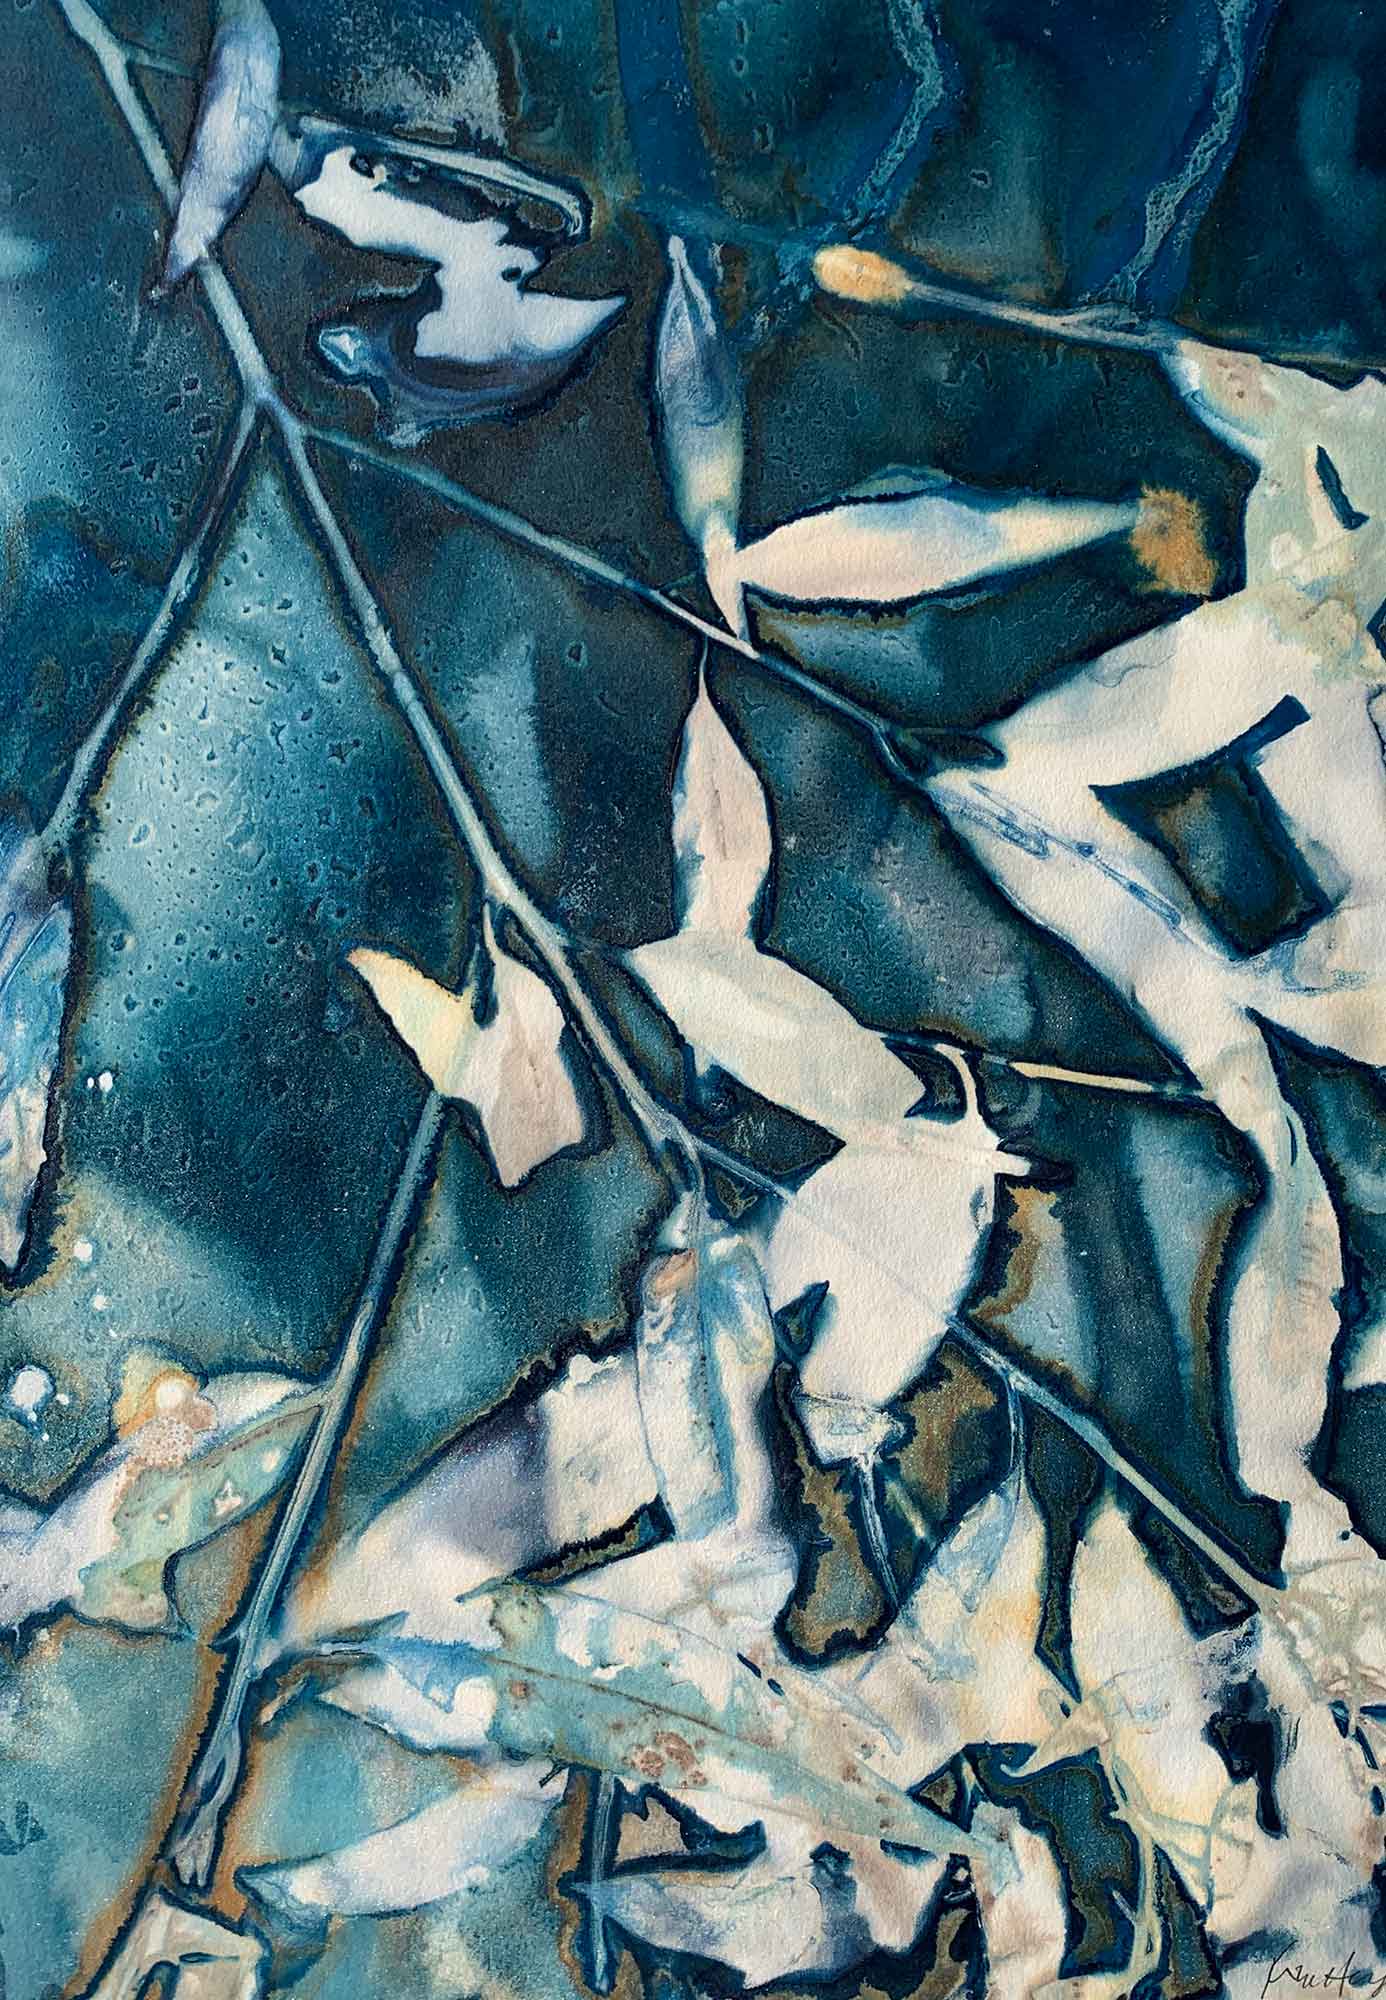 The sky through the eucalyptus I - Kim Herringe, wet cyanotype